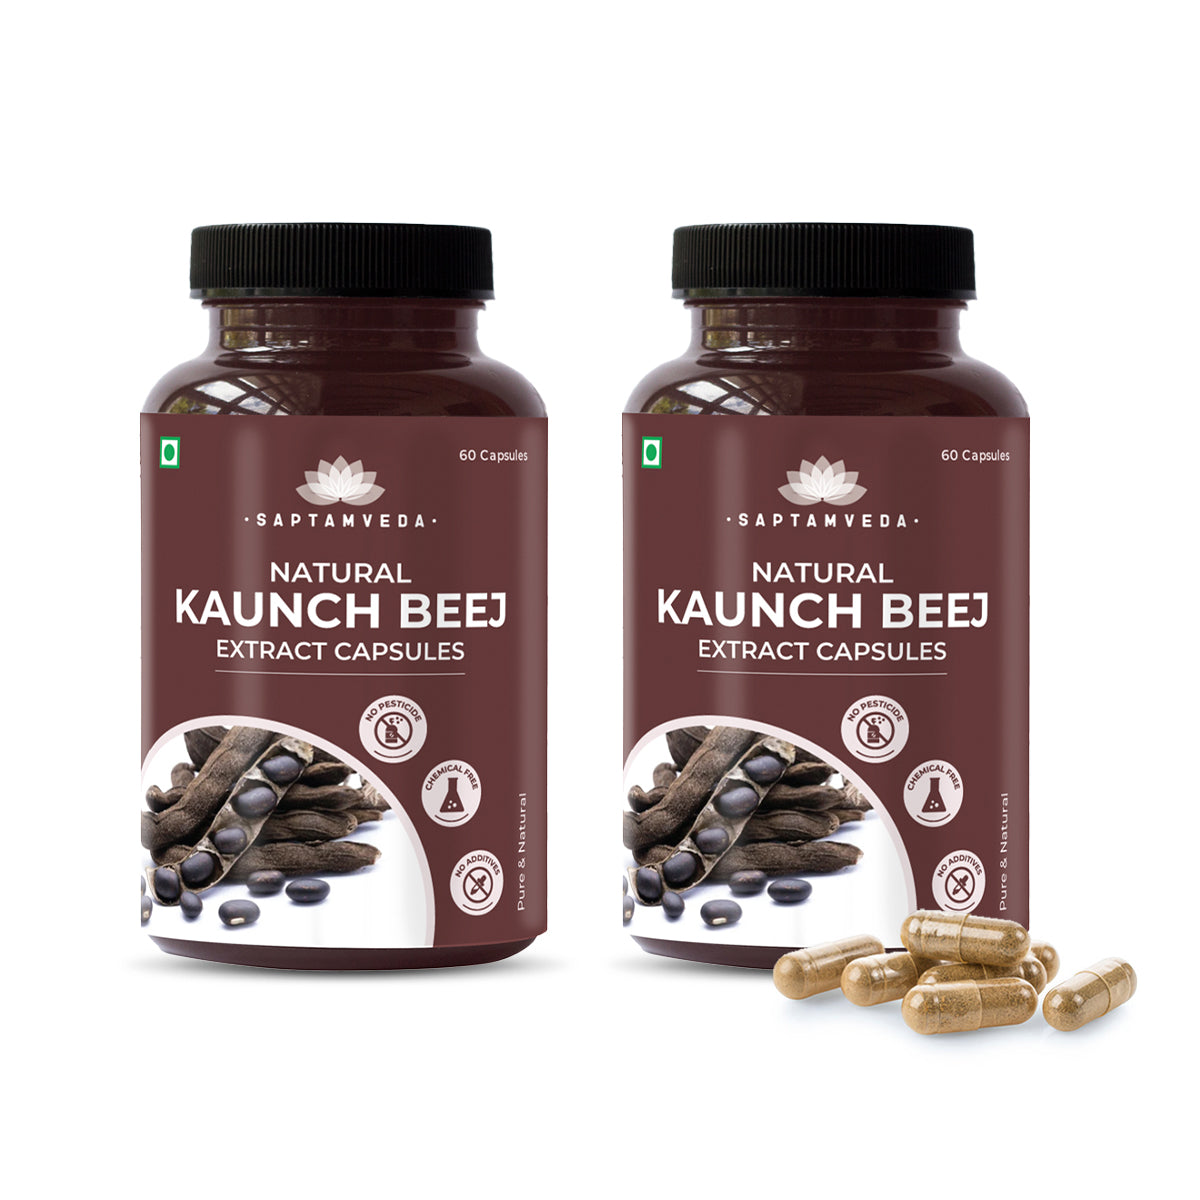 Saptamveda Natural Kaunch Beej Extract Capsules